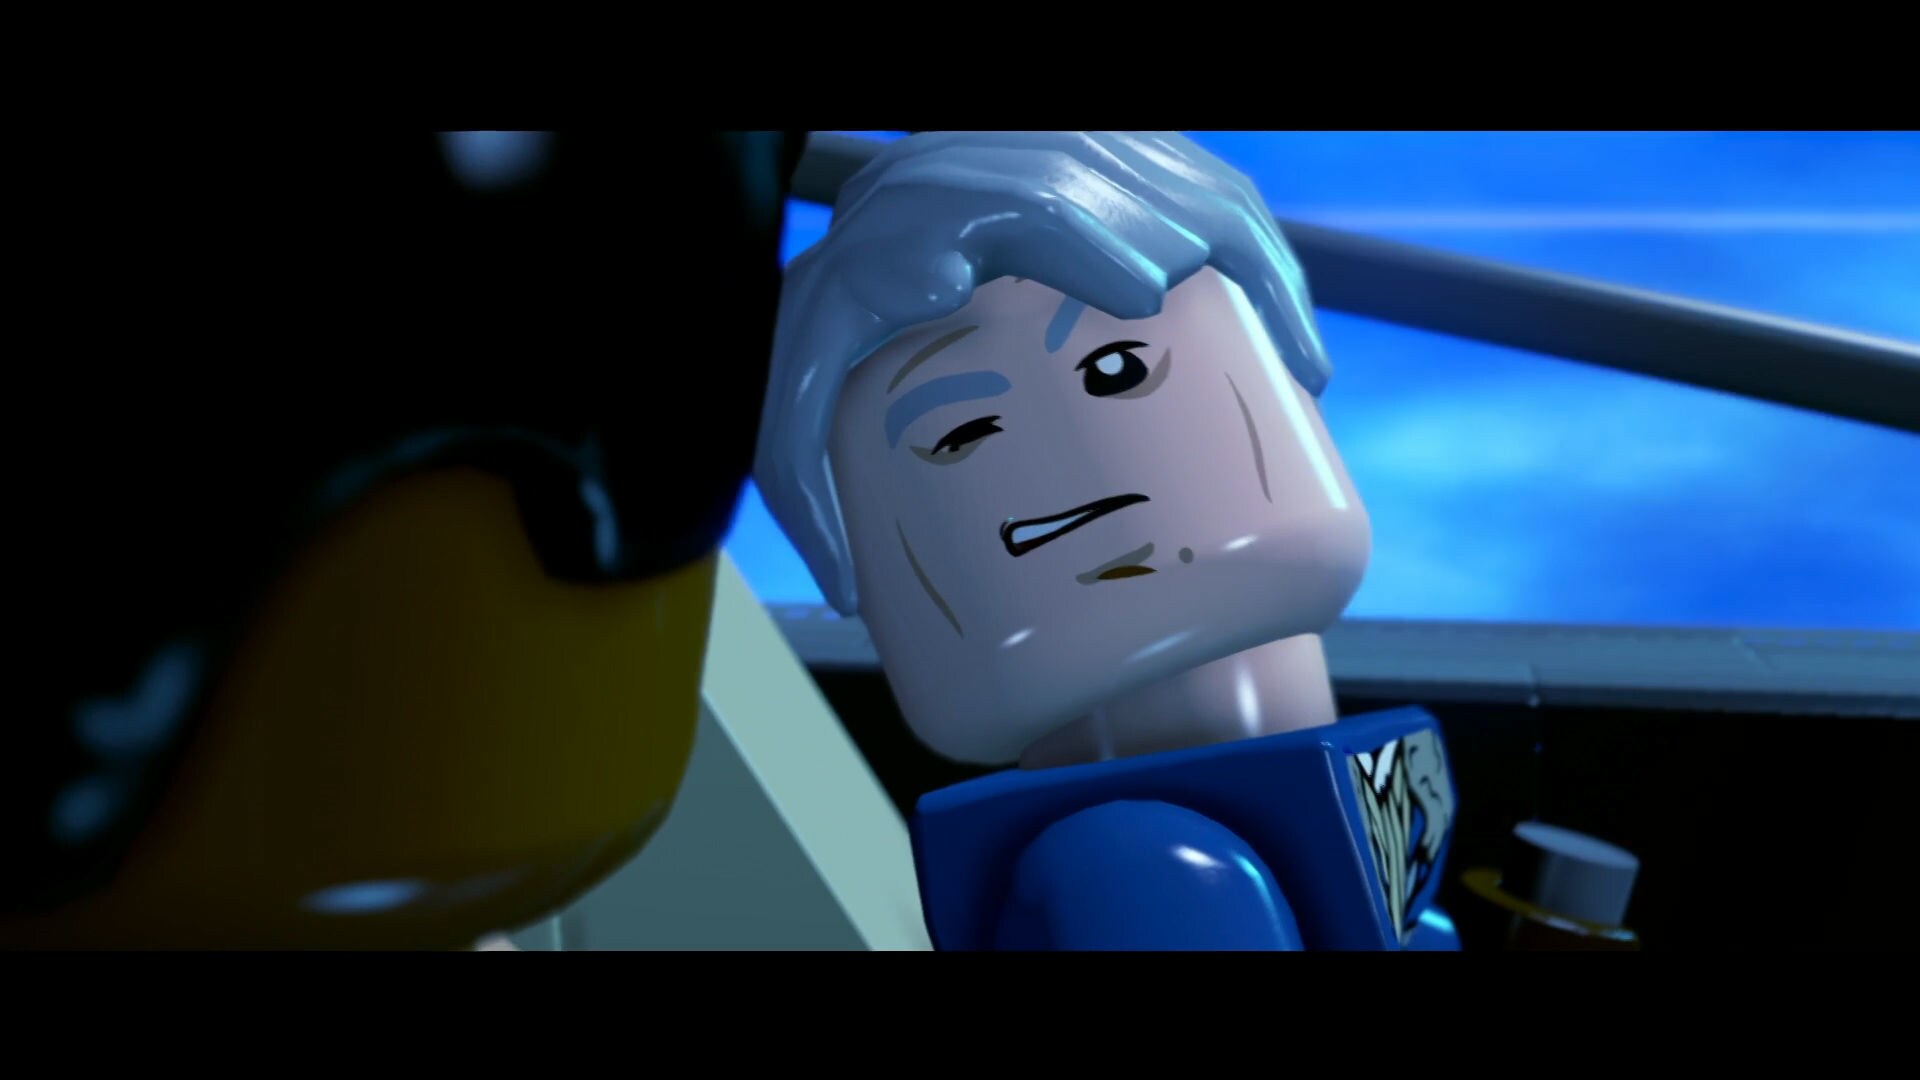 LEGO Star Wars: The Force Awakens "Galaxy of Bricks" TV Spot